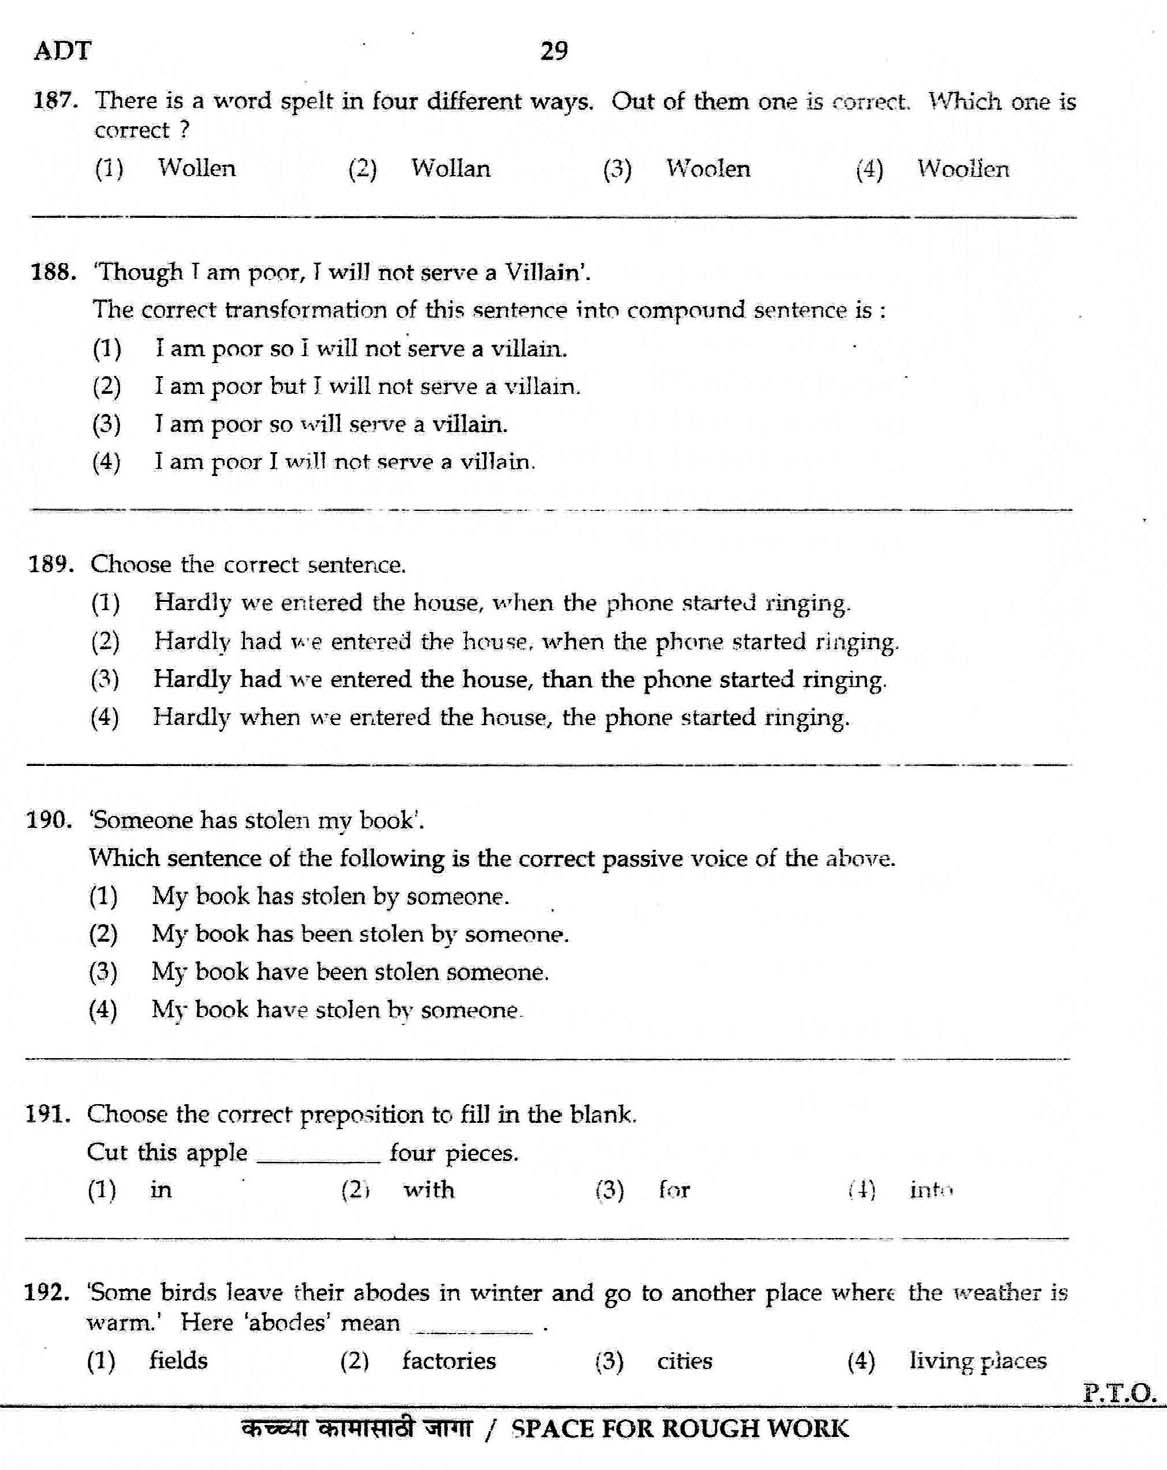 Maharashtra PSC Clerk Typist Exam Question Paper 2007 28